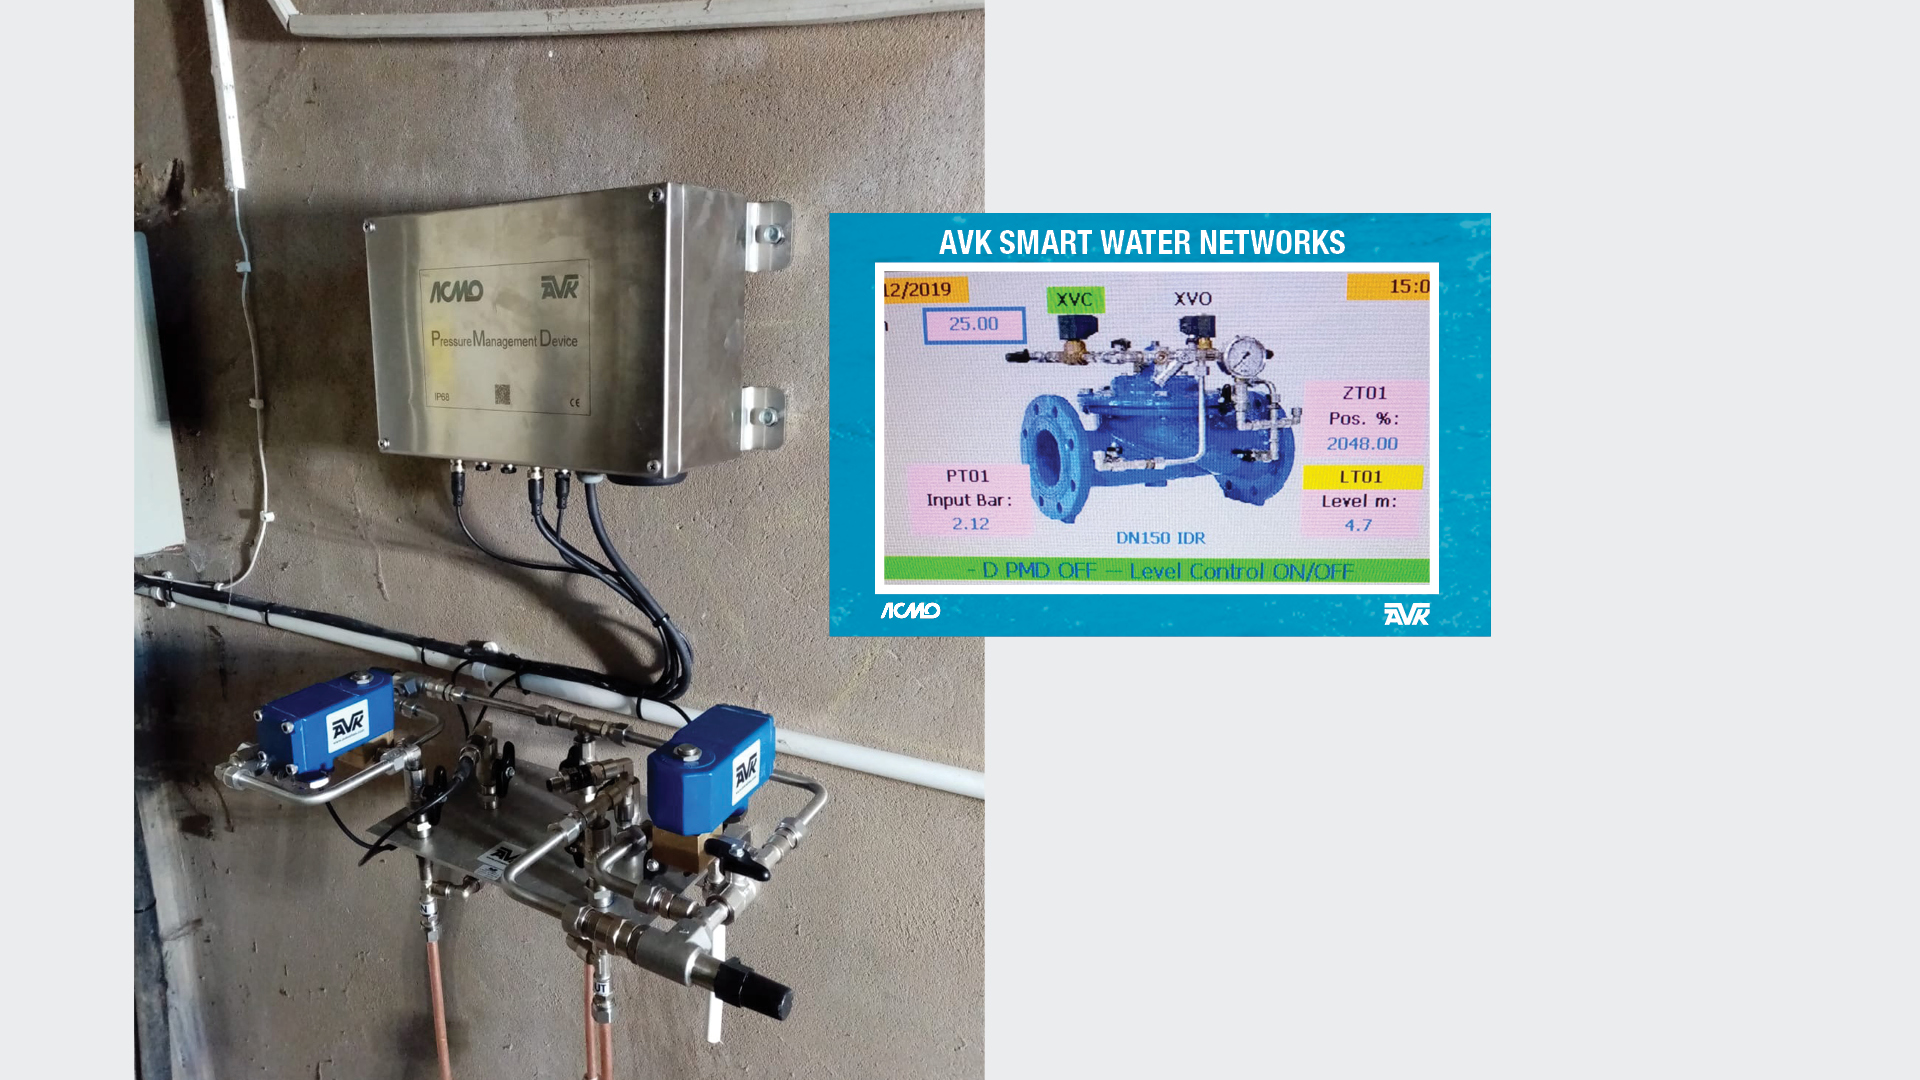 AVK Smart Water Pressure Management Device